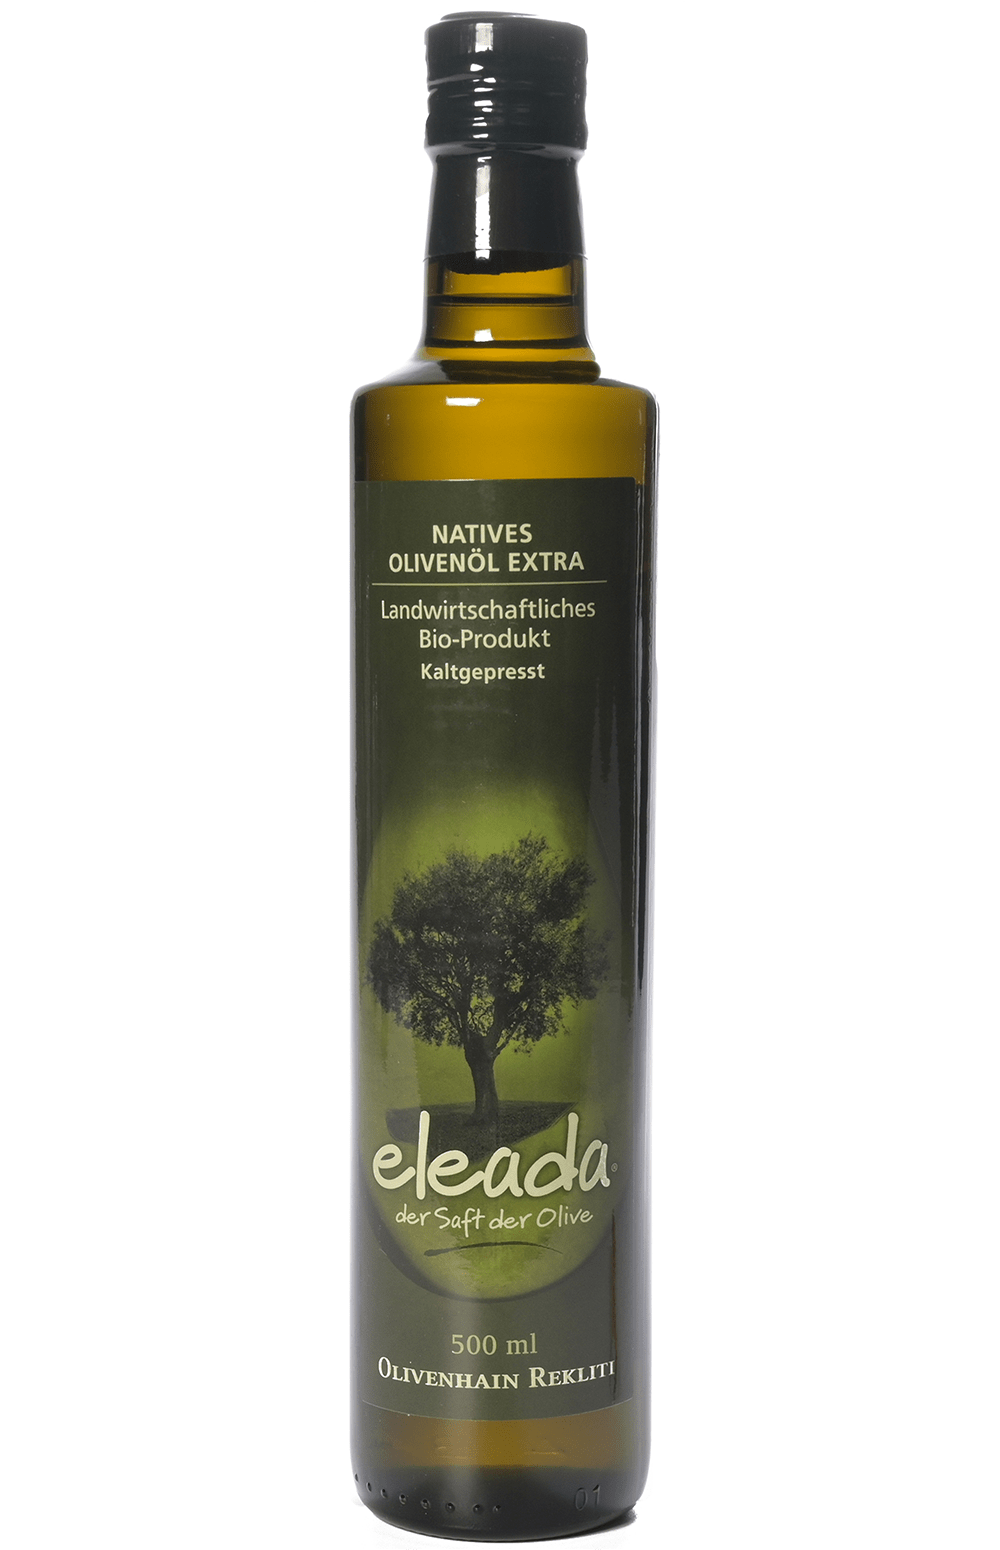 ELAIADA- THE JUICE OF OLIVE